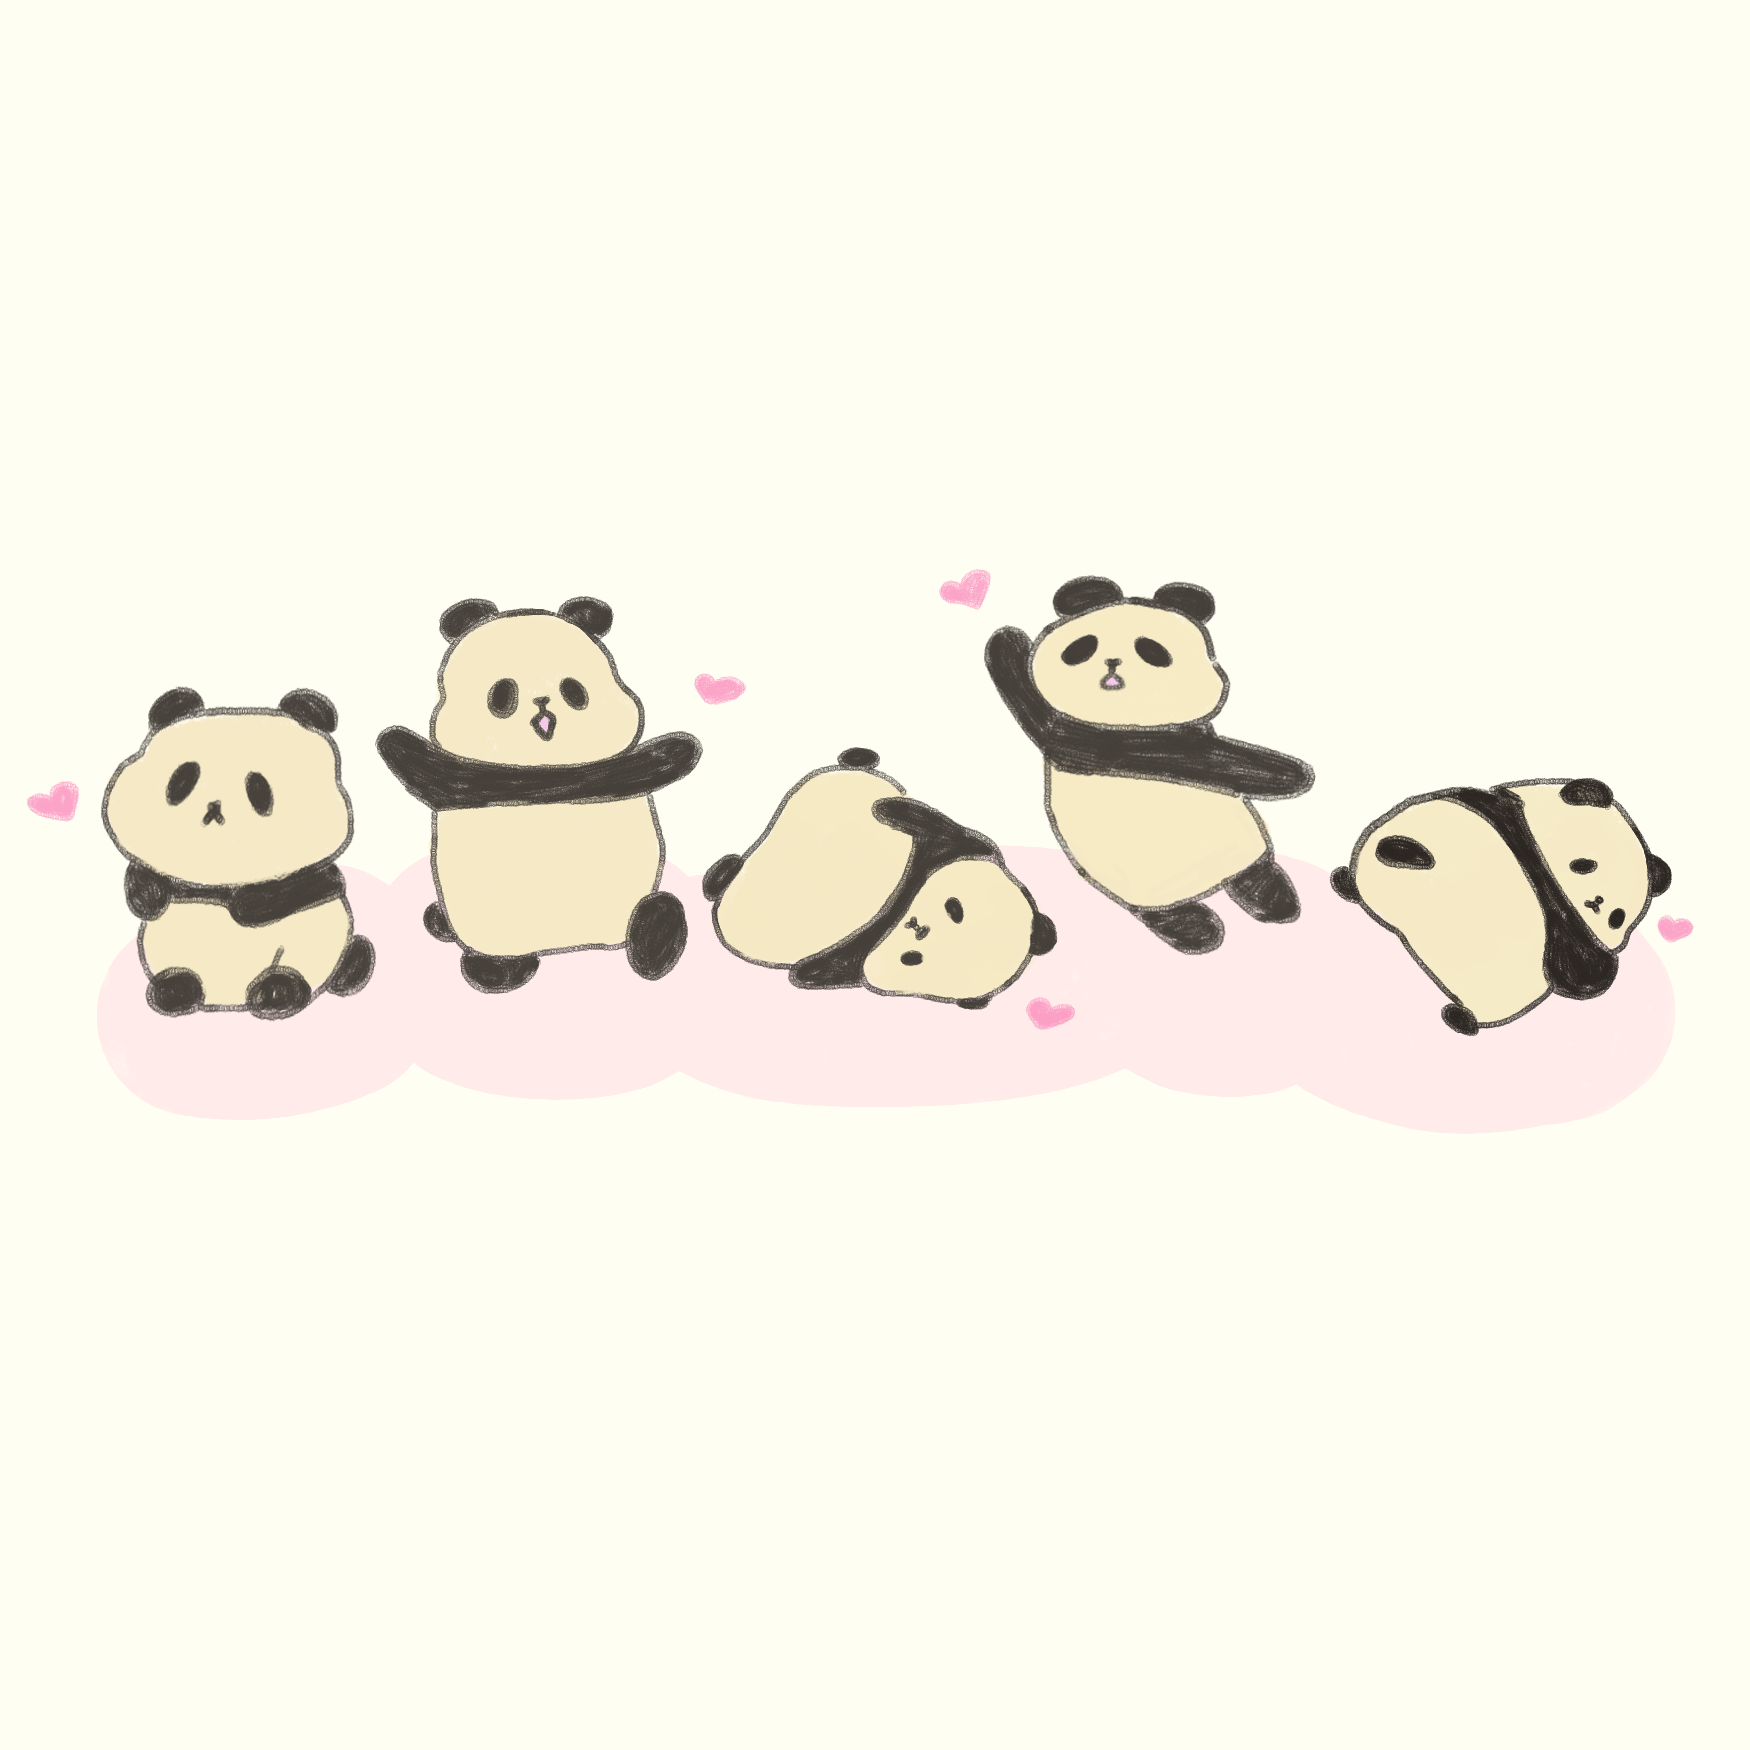 A row of five cute pandas in a row - Panda